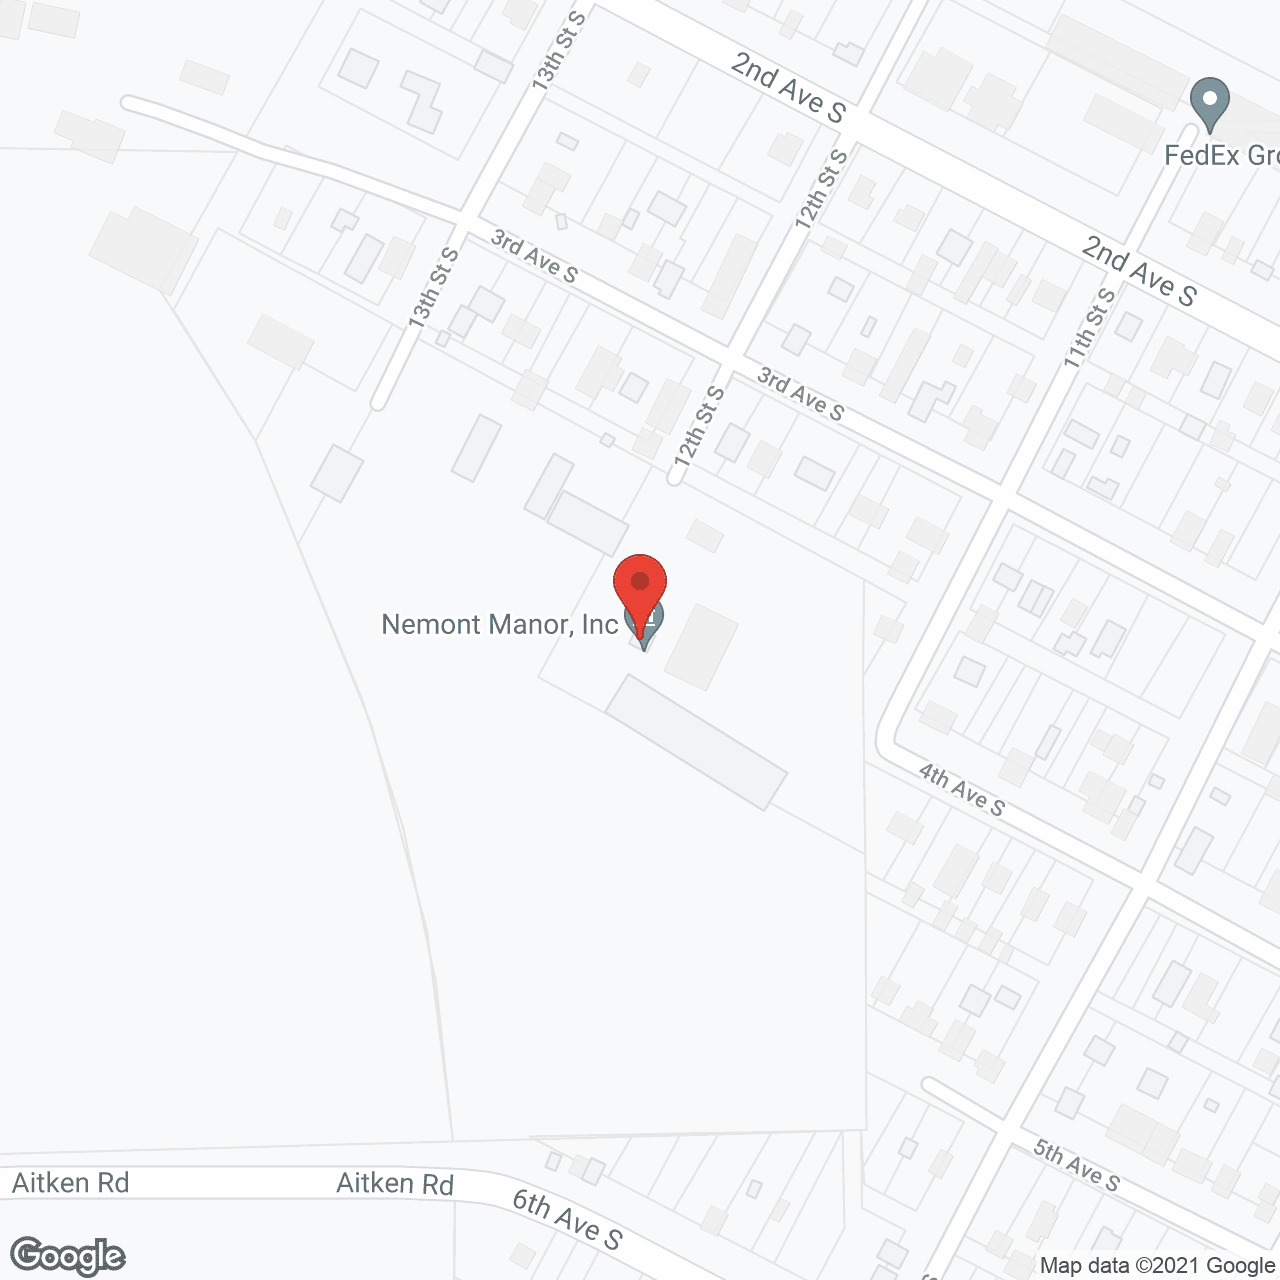 Nemont Manor Inc in google map